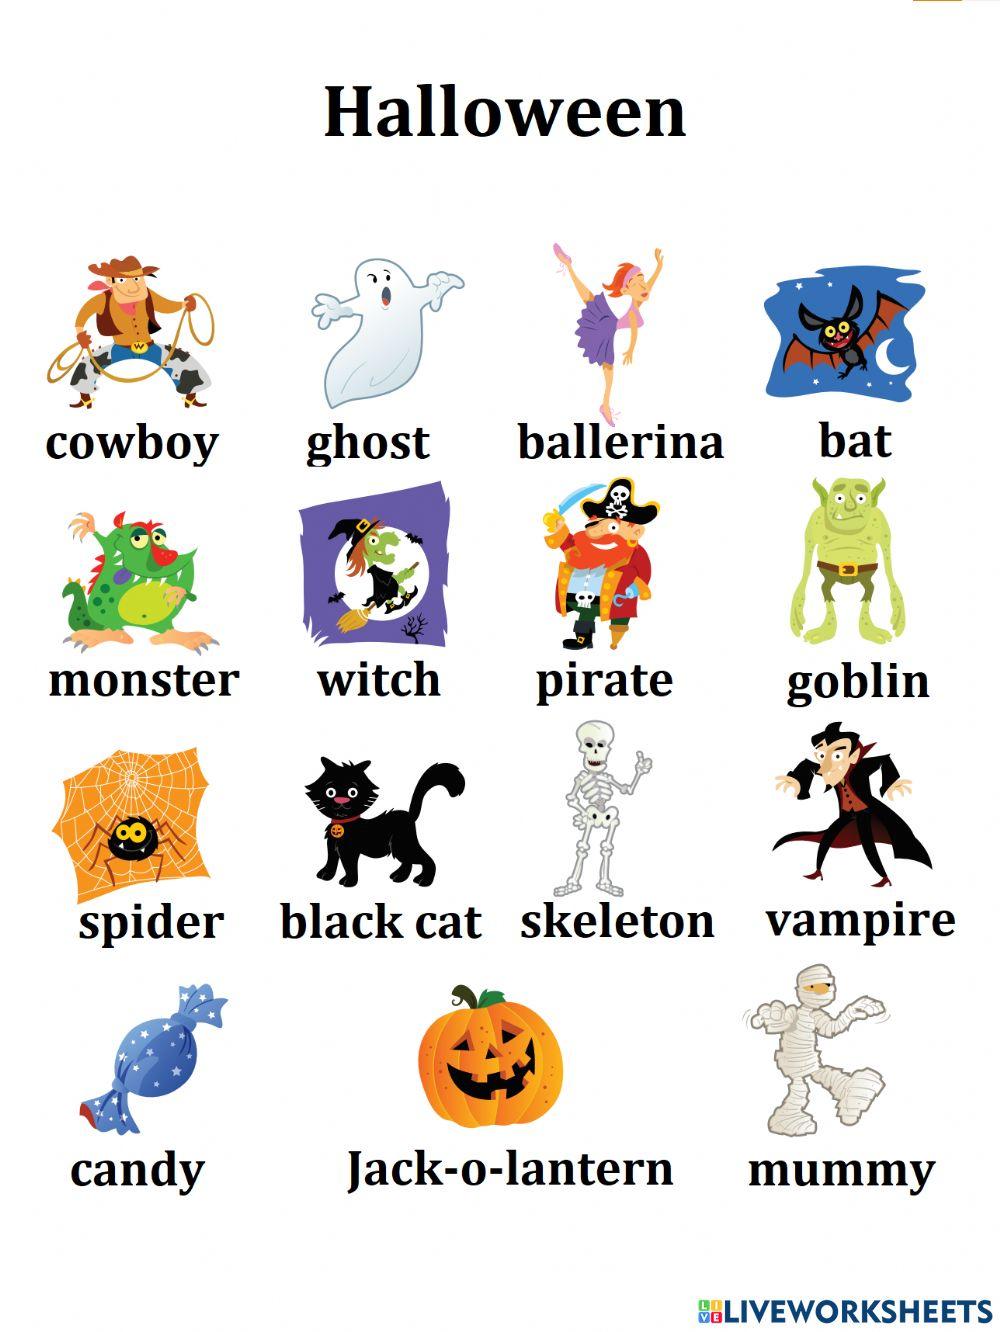 Halloween online exercise for preschool | Live Worksheets